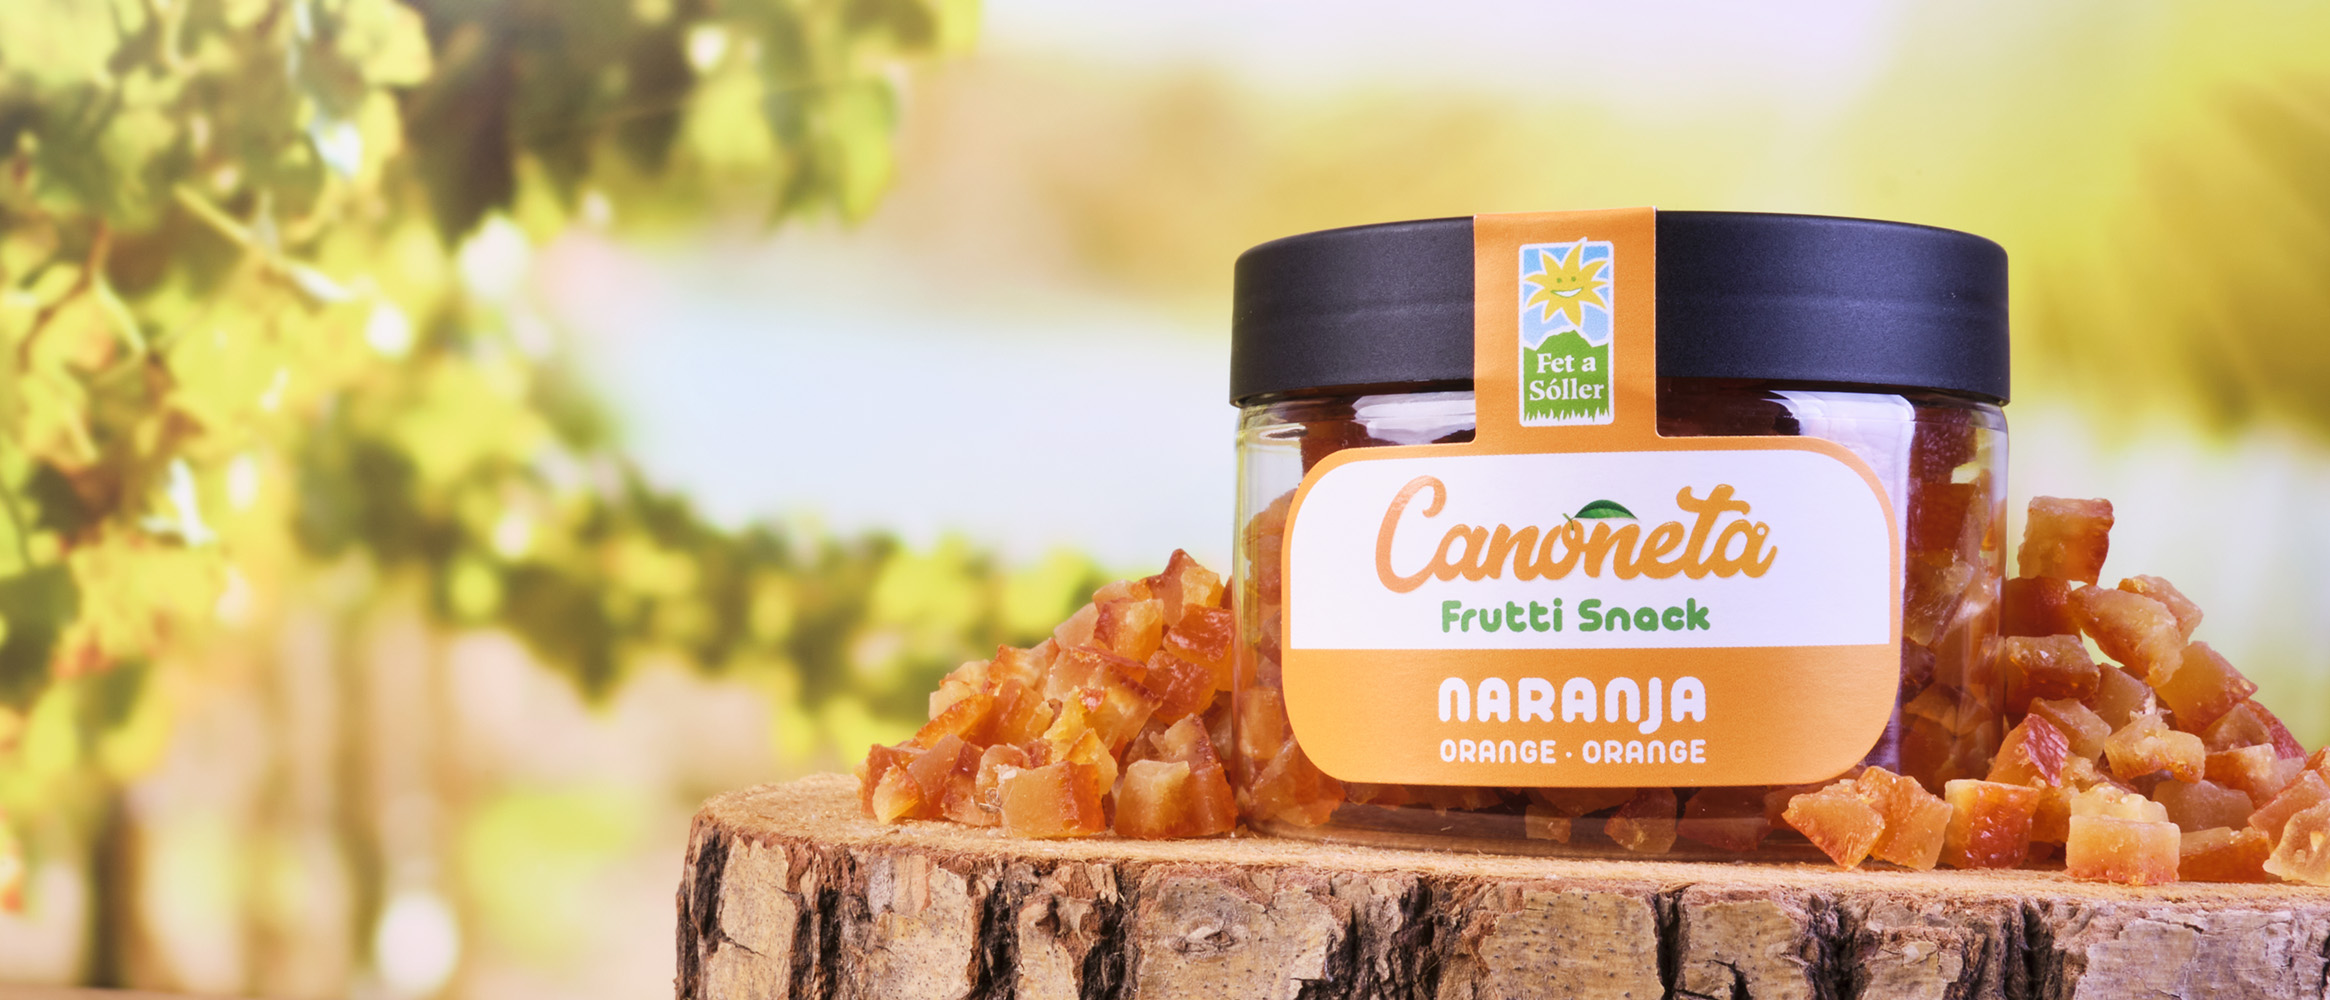 Canoneta® Frutti Snack Orange